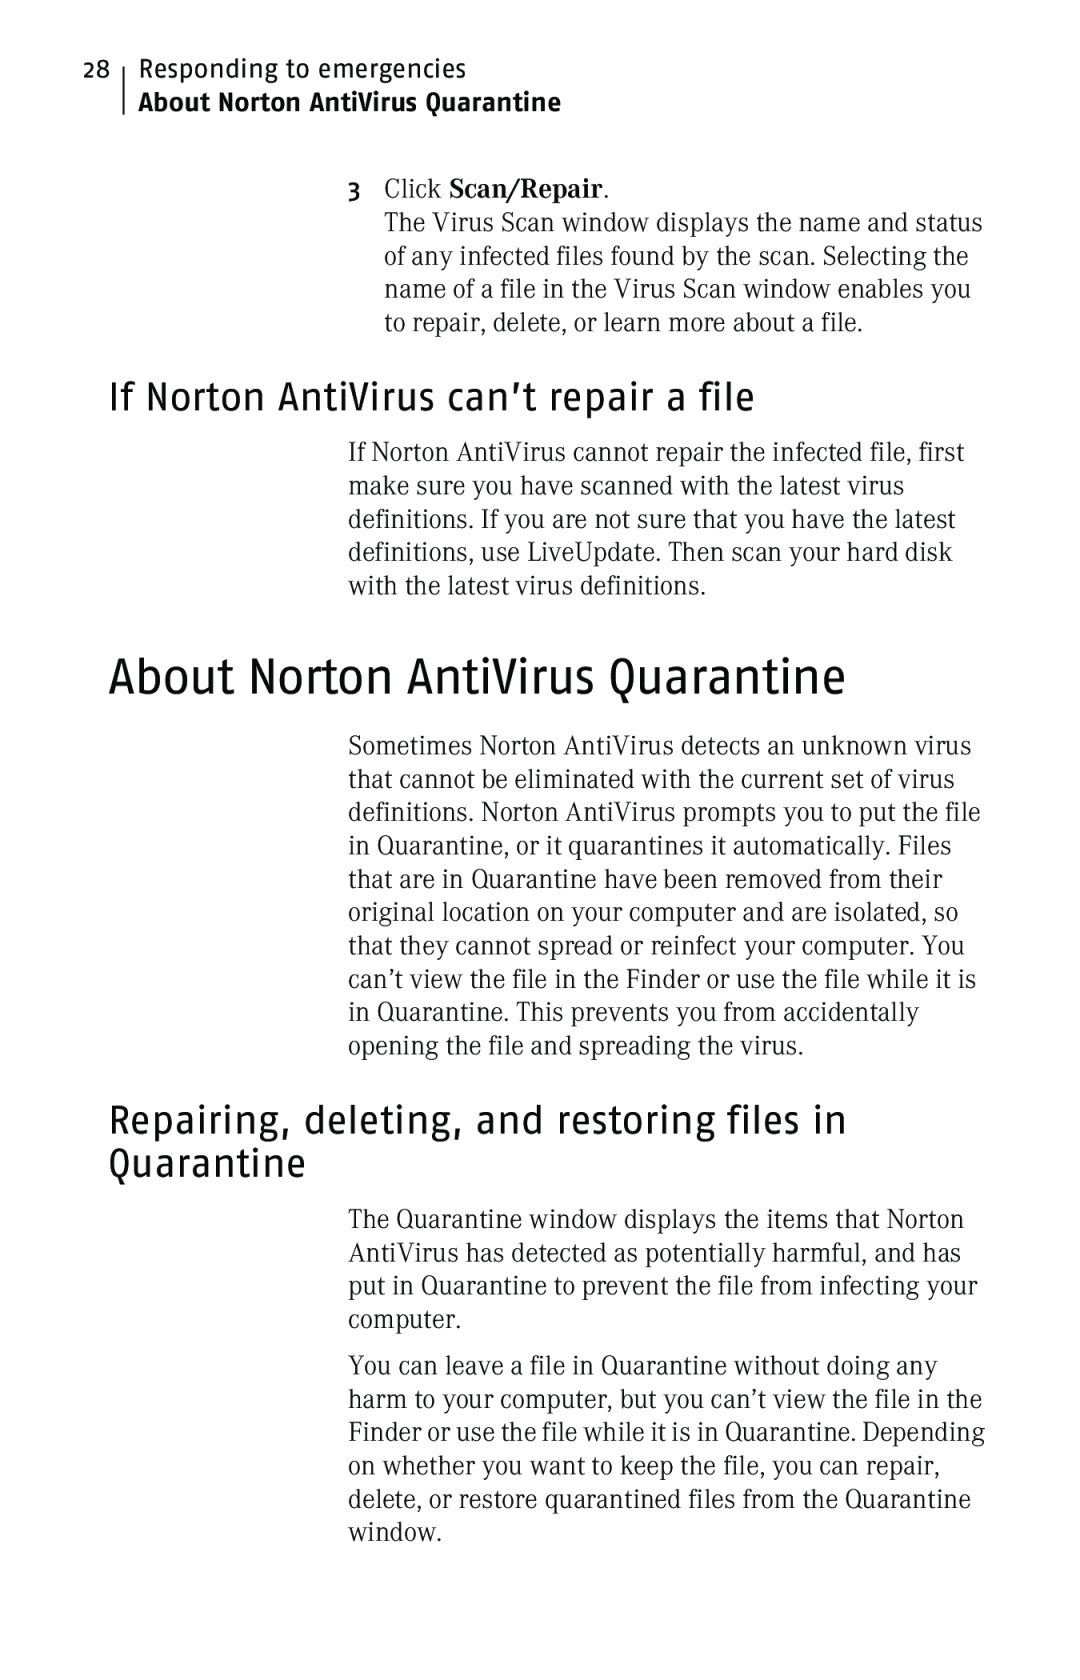 Symantec 10 manual About Norton AntiVirus Quarantine, If Norton AntiVirus can’t repair a file, 3Click Scan/Repair 